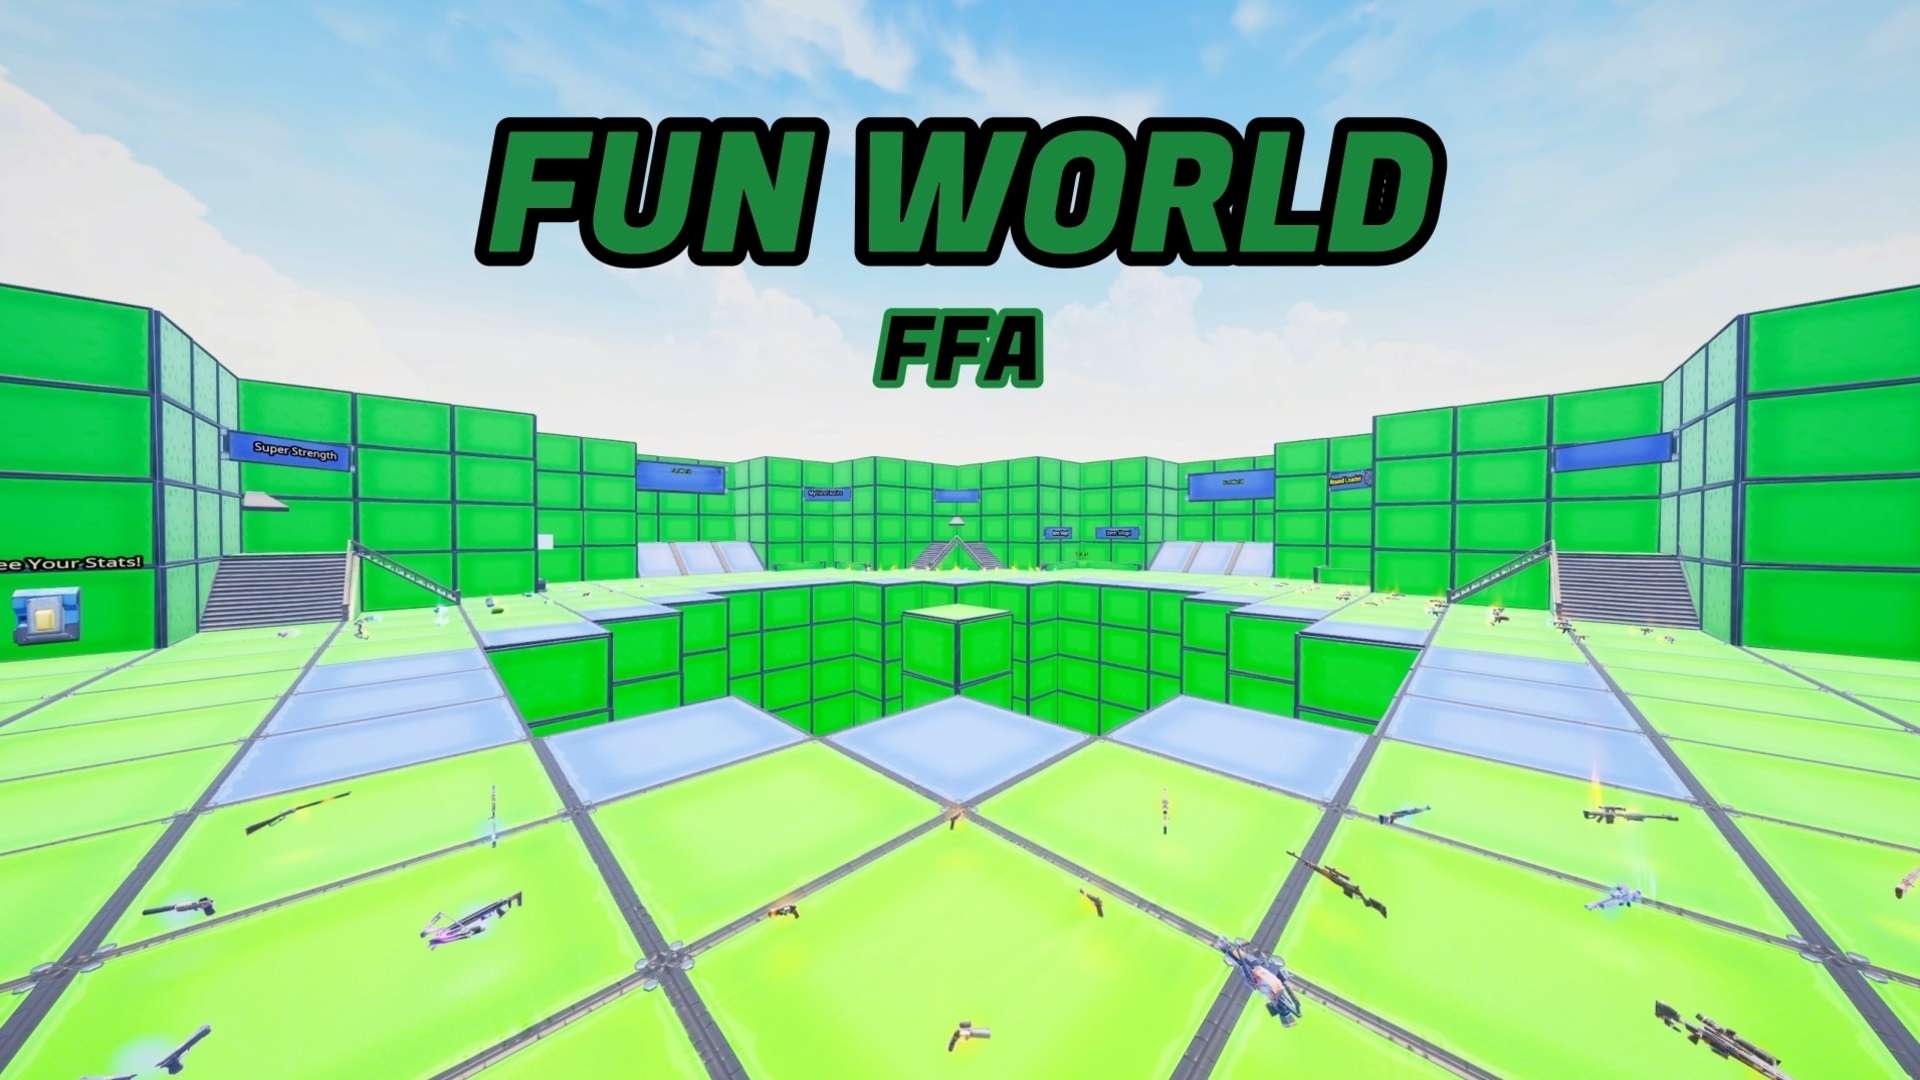 Fun world